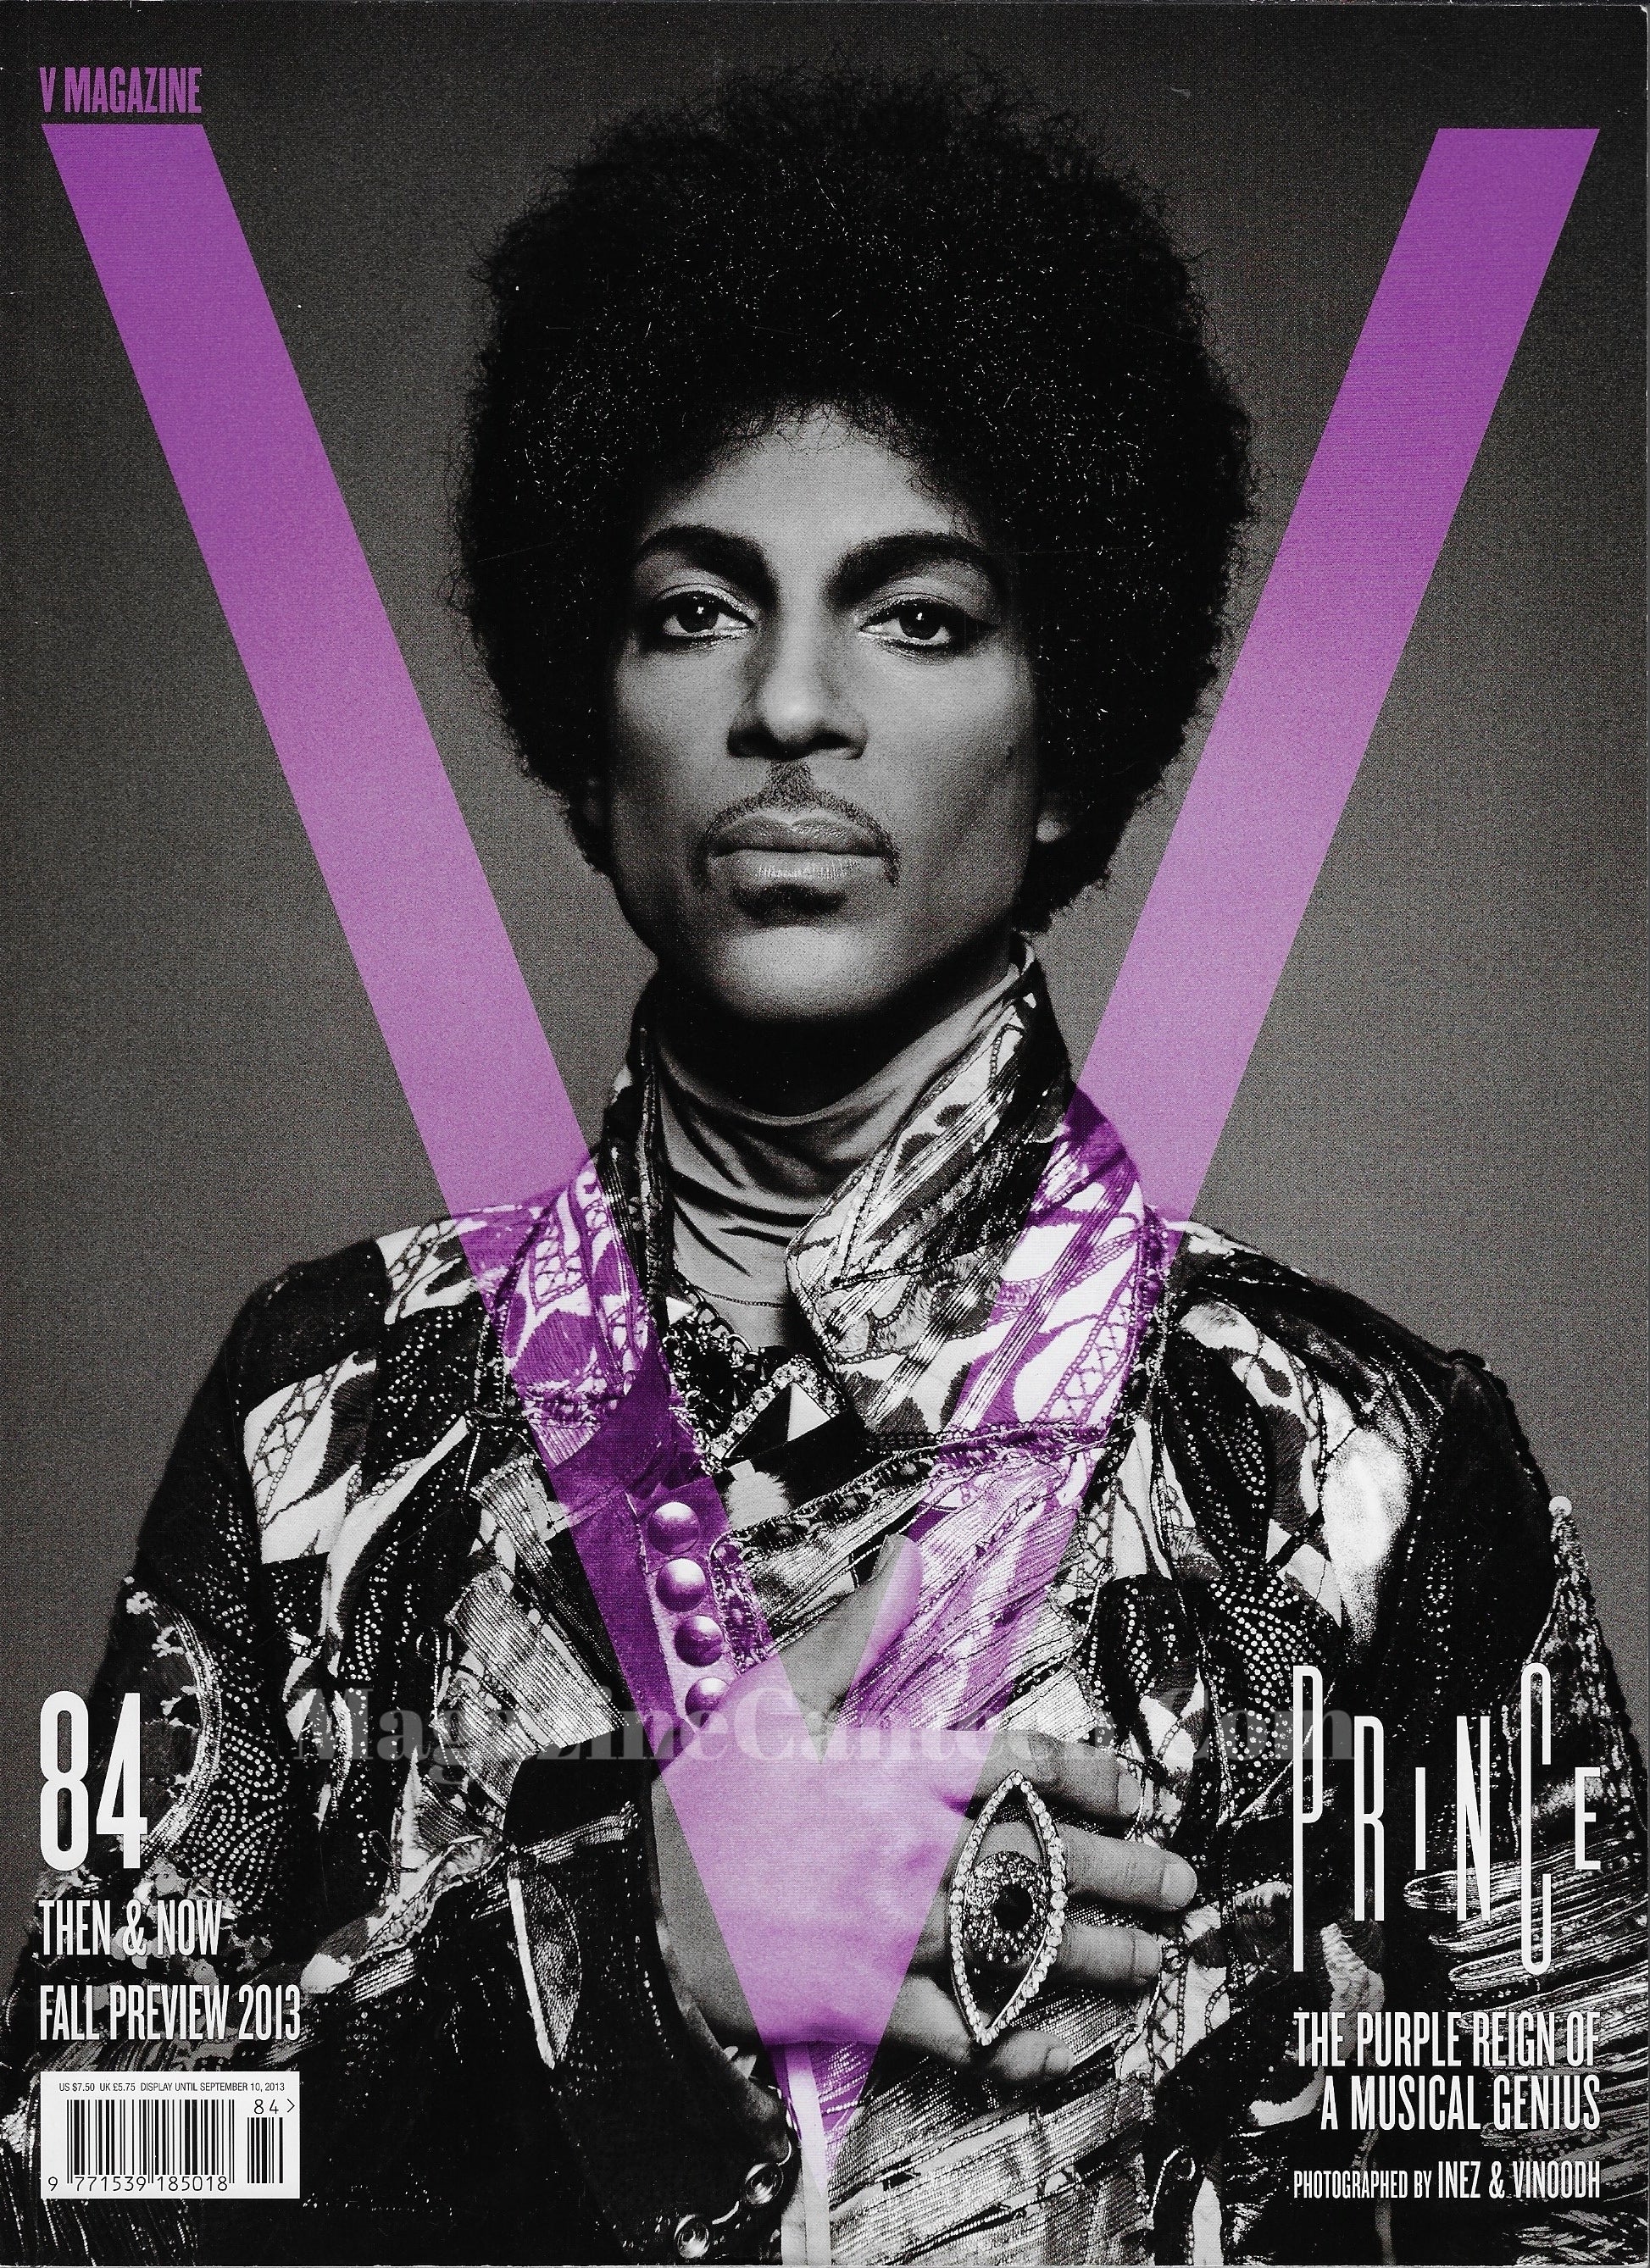  V Magazine 84 - Prince 2014